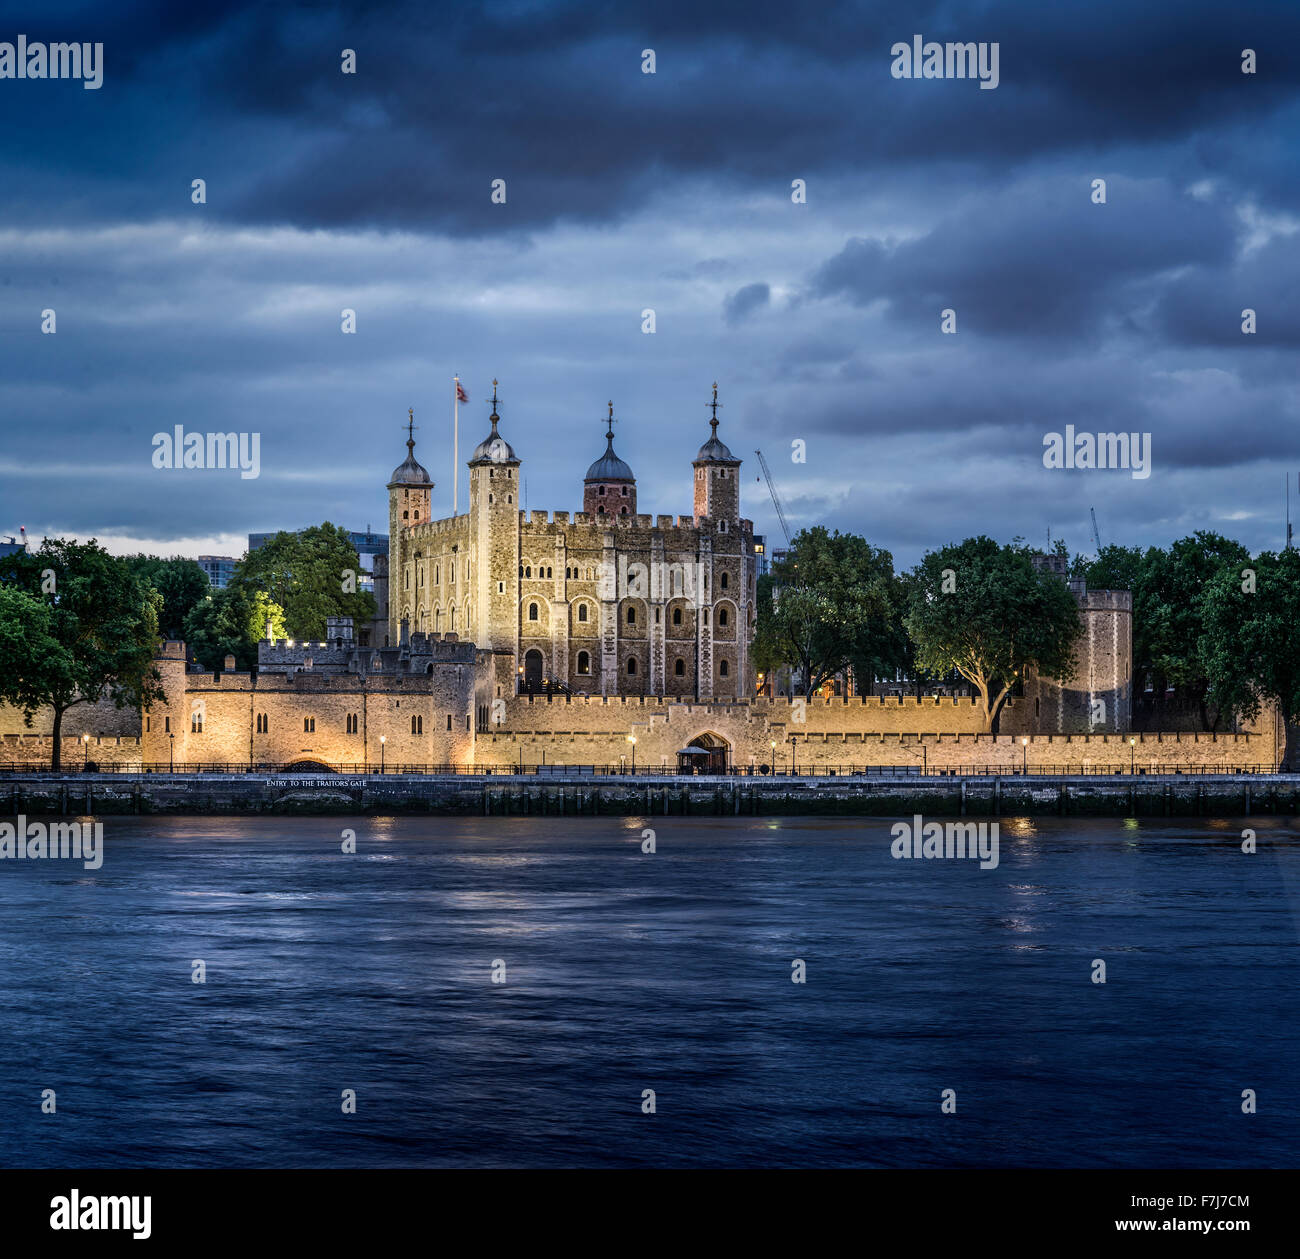 Großbritannien, England, London, Tower of London bei Nacht Stockfoto